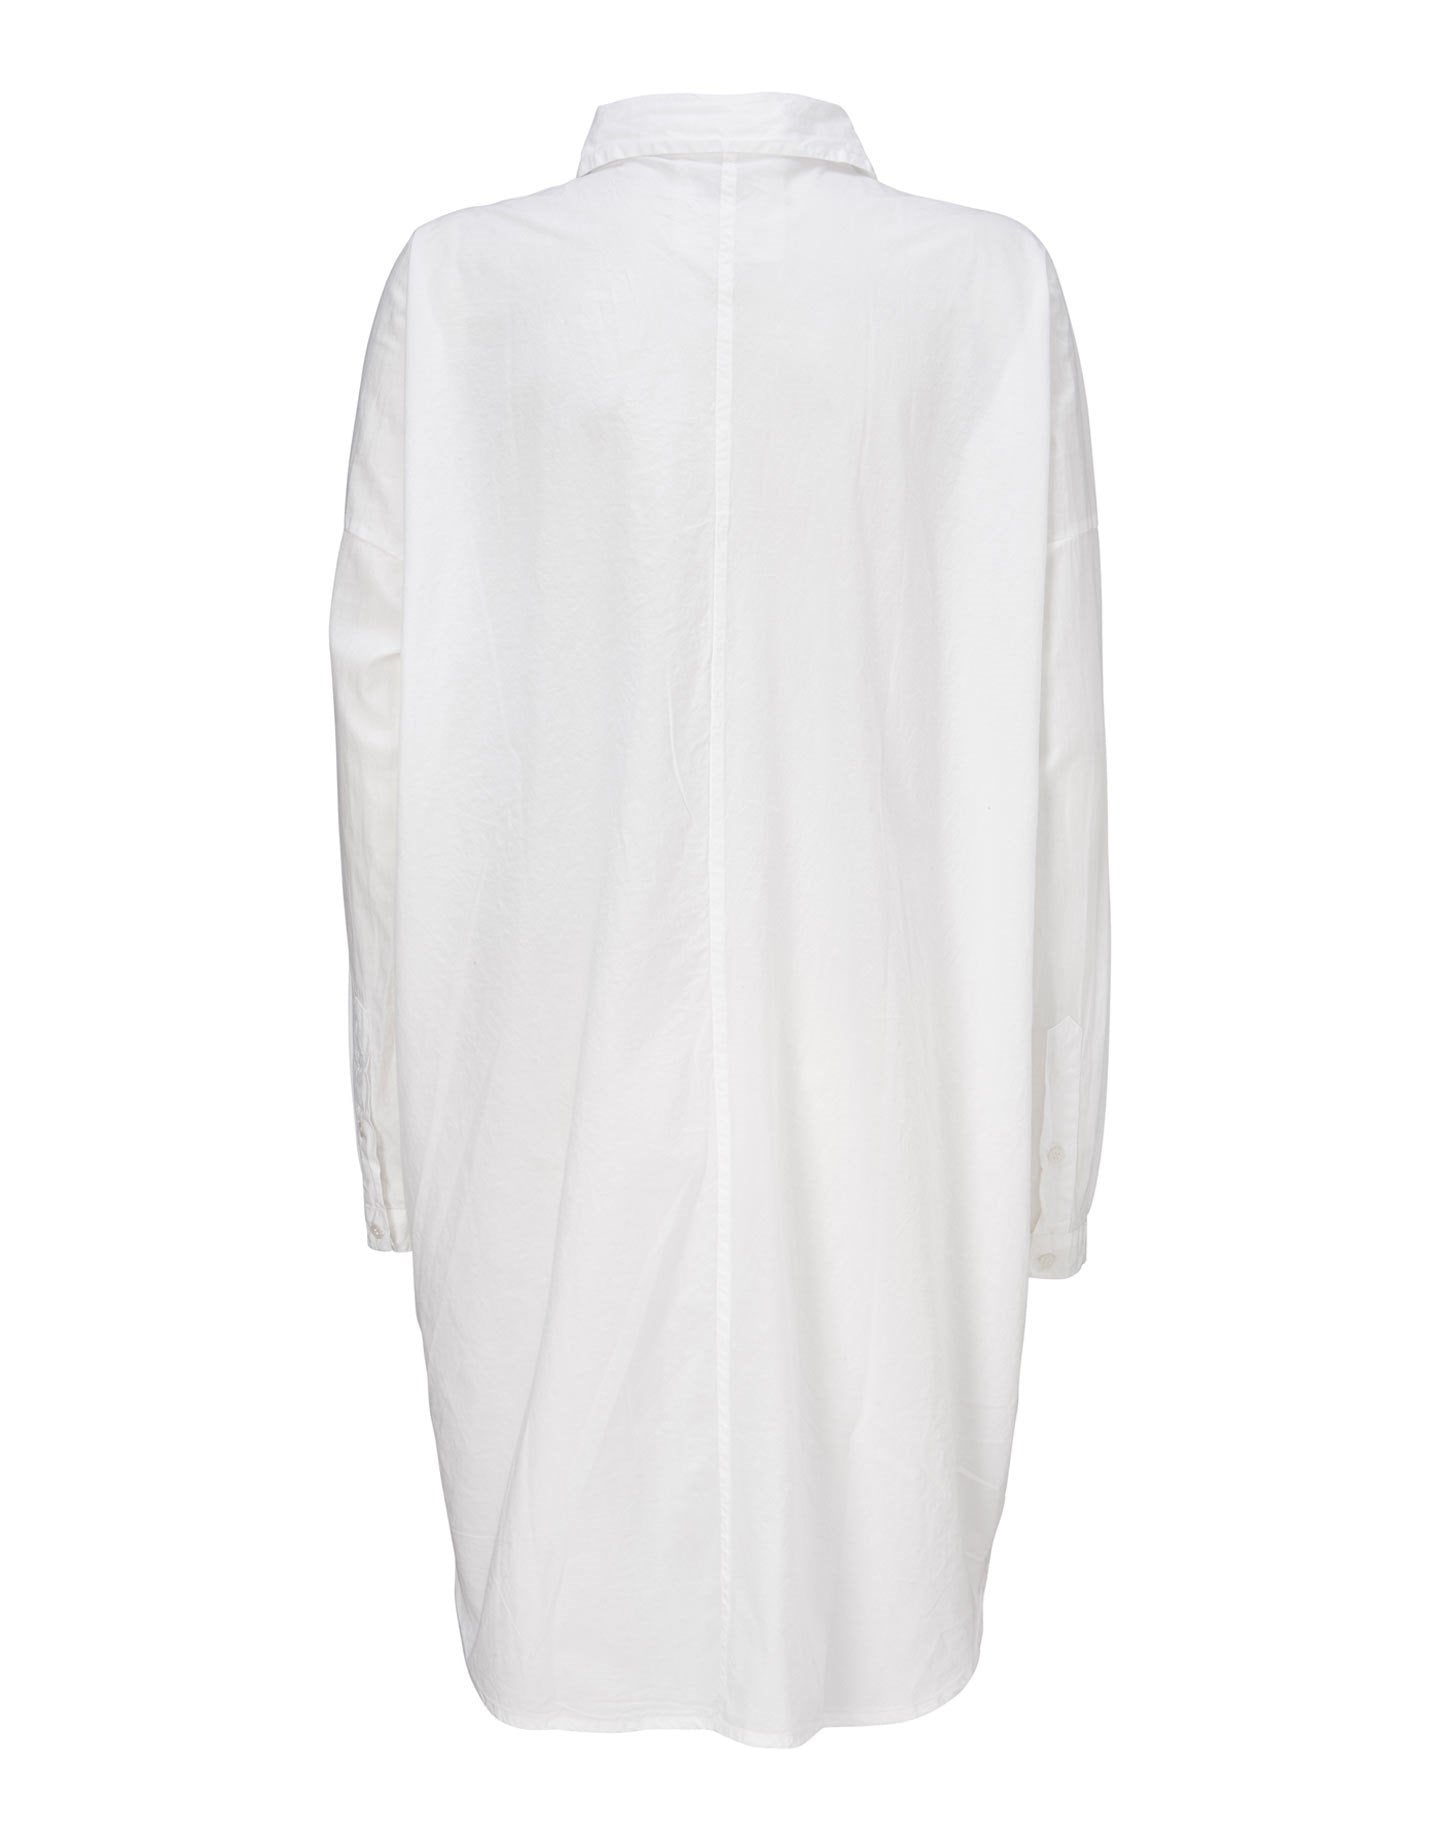 Aiayu "Shirt Dress" White